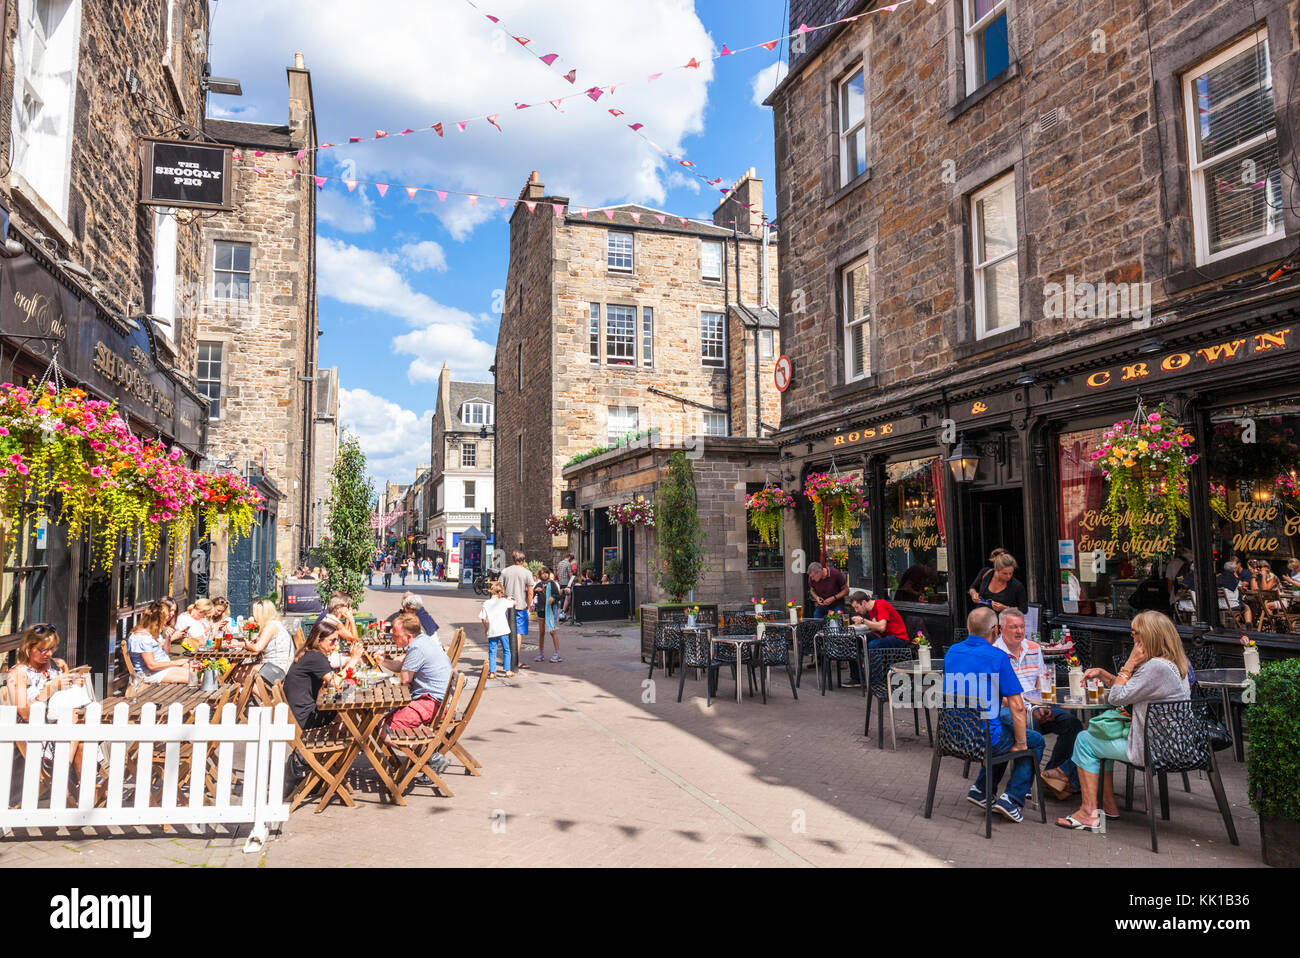 Rose street Edinburgh scotland edinburgh rose street cafes pubs and